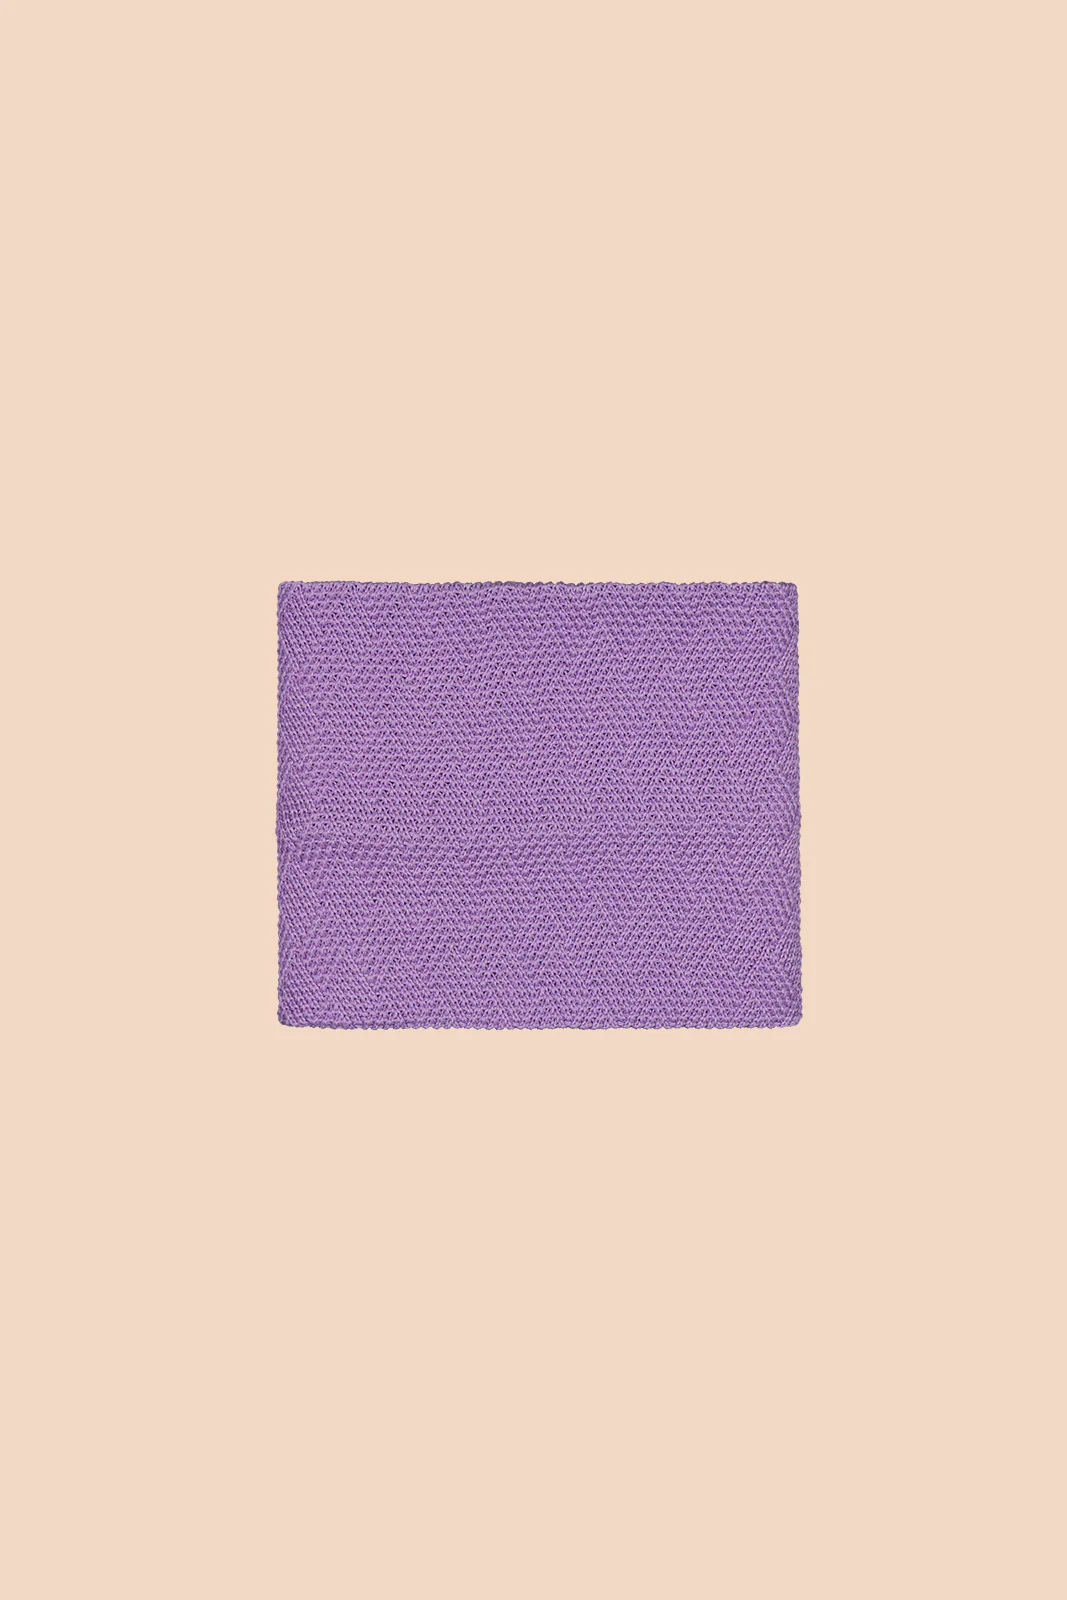 Kaiko - Grid Tube Schal - Lavendel